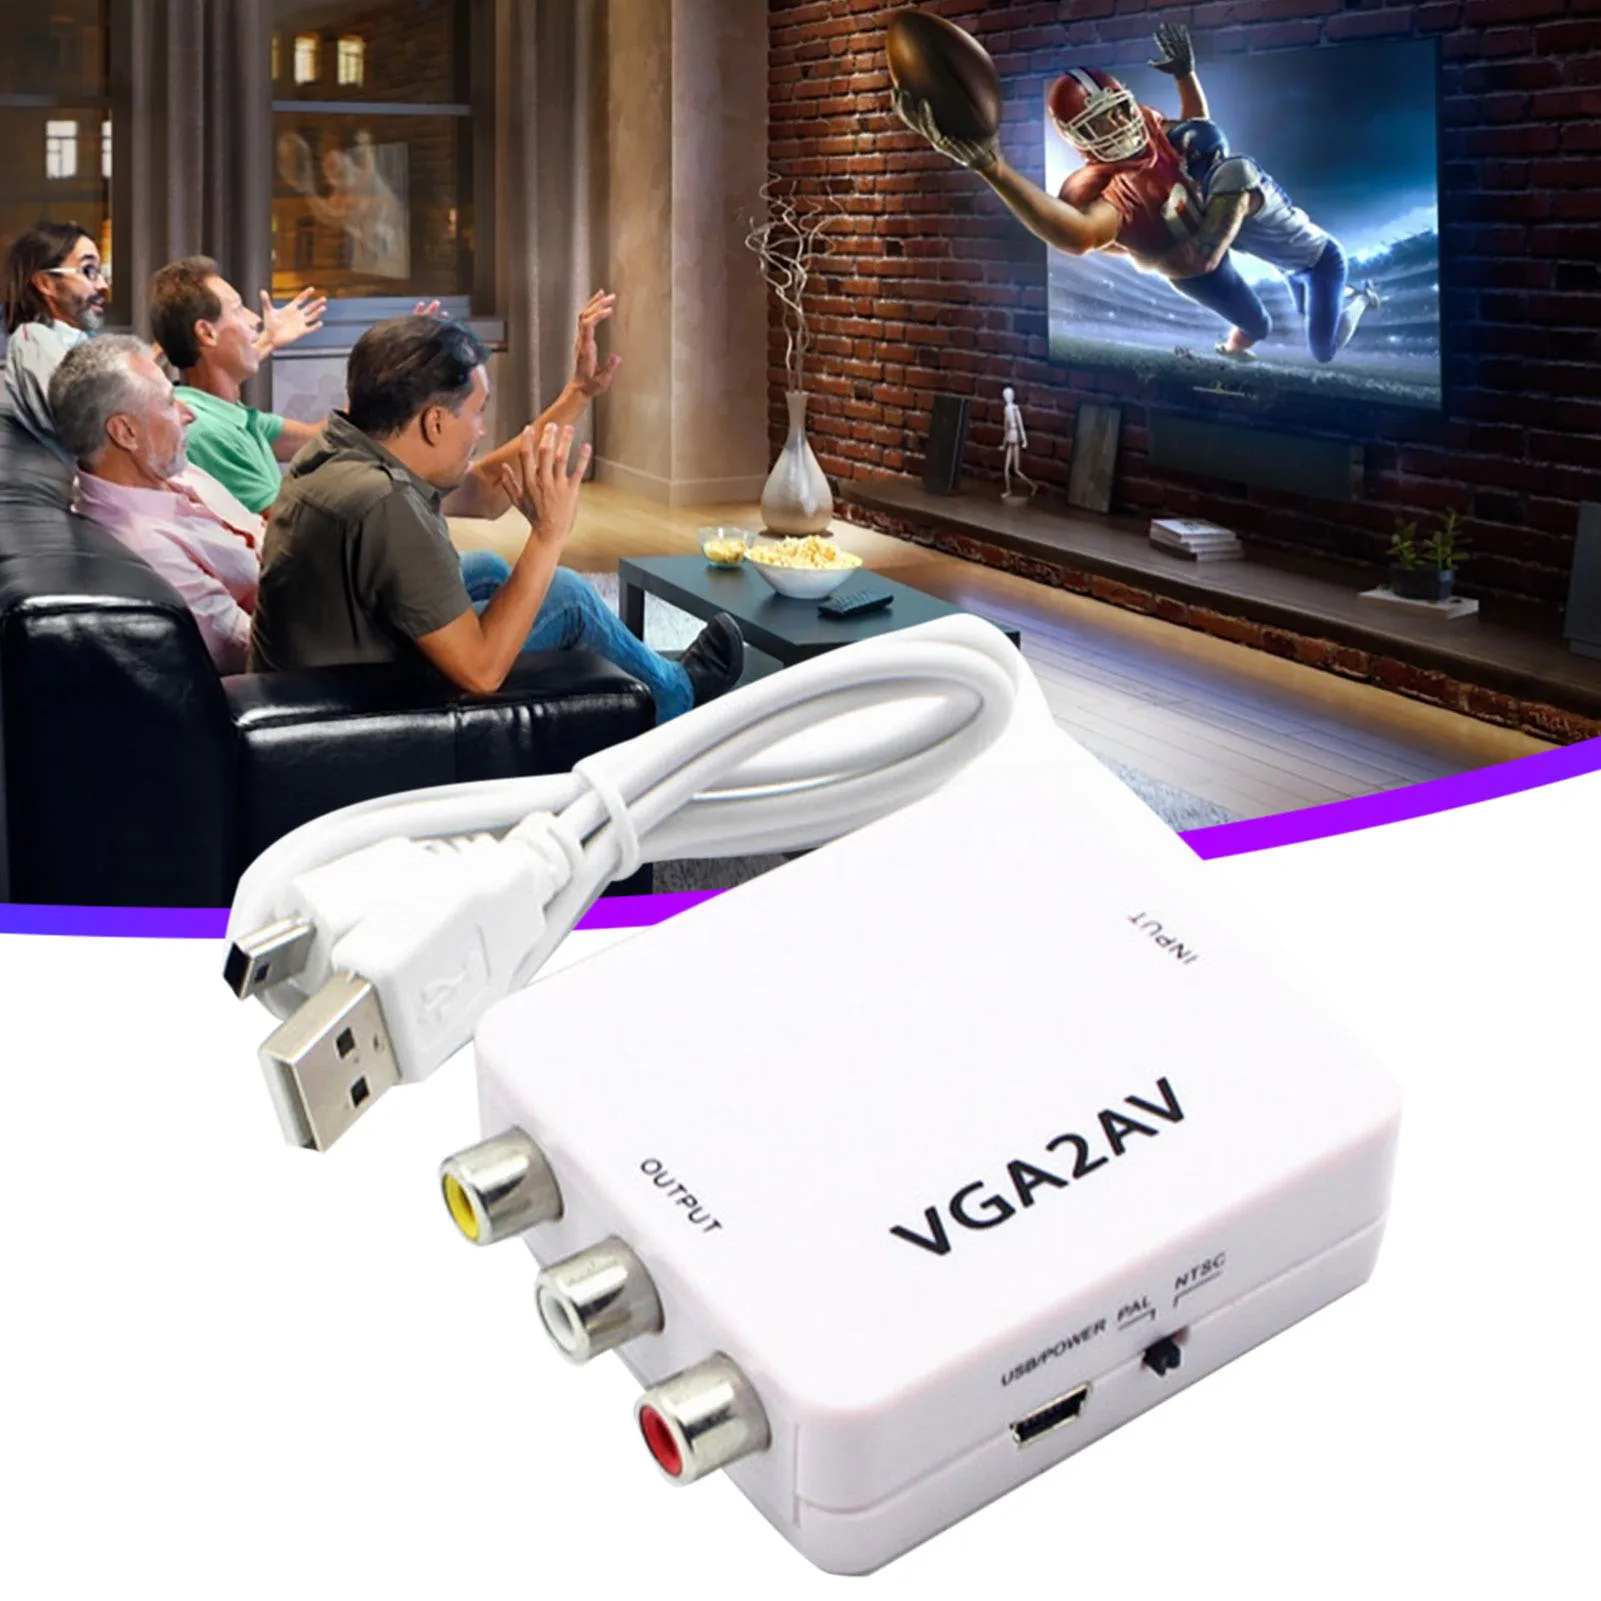 

Mini HD AV2VGA Video Digital Converter Box with 3.5mm Audio AV RCA CVBS to VGA Video HDTV Adapter Conversor Box with USB Cable